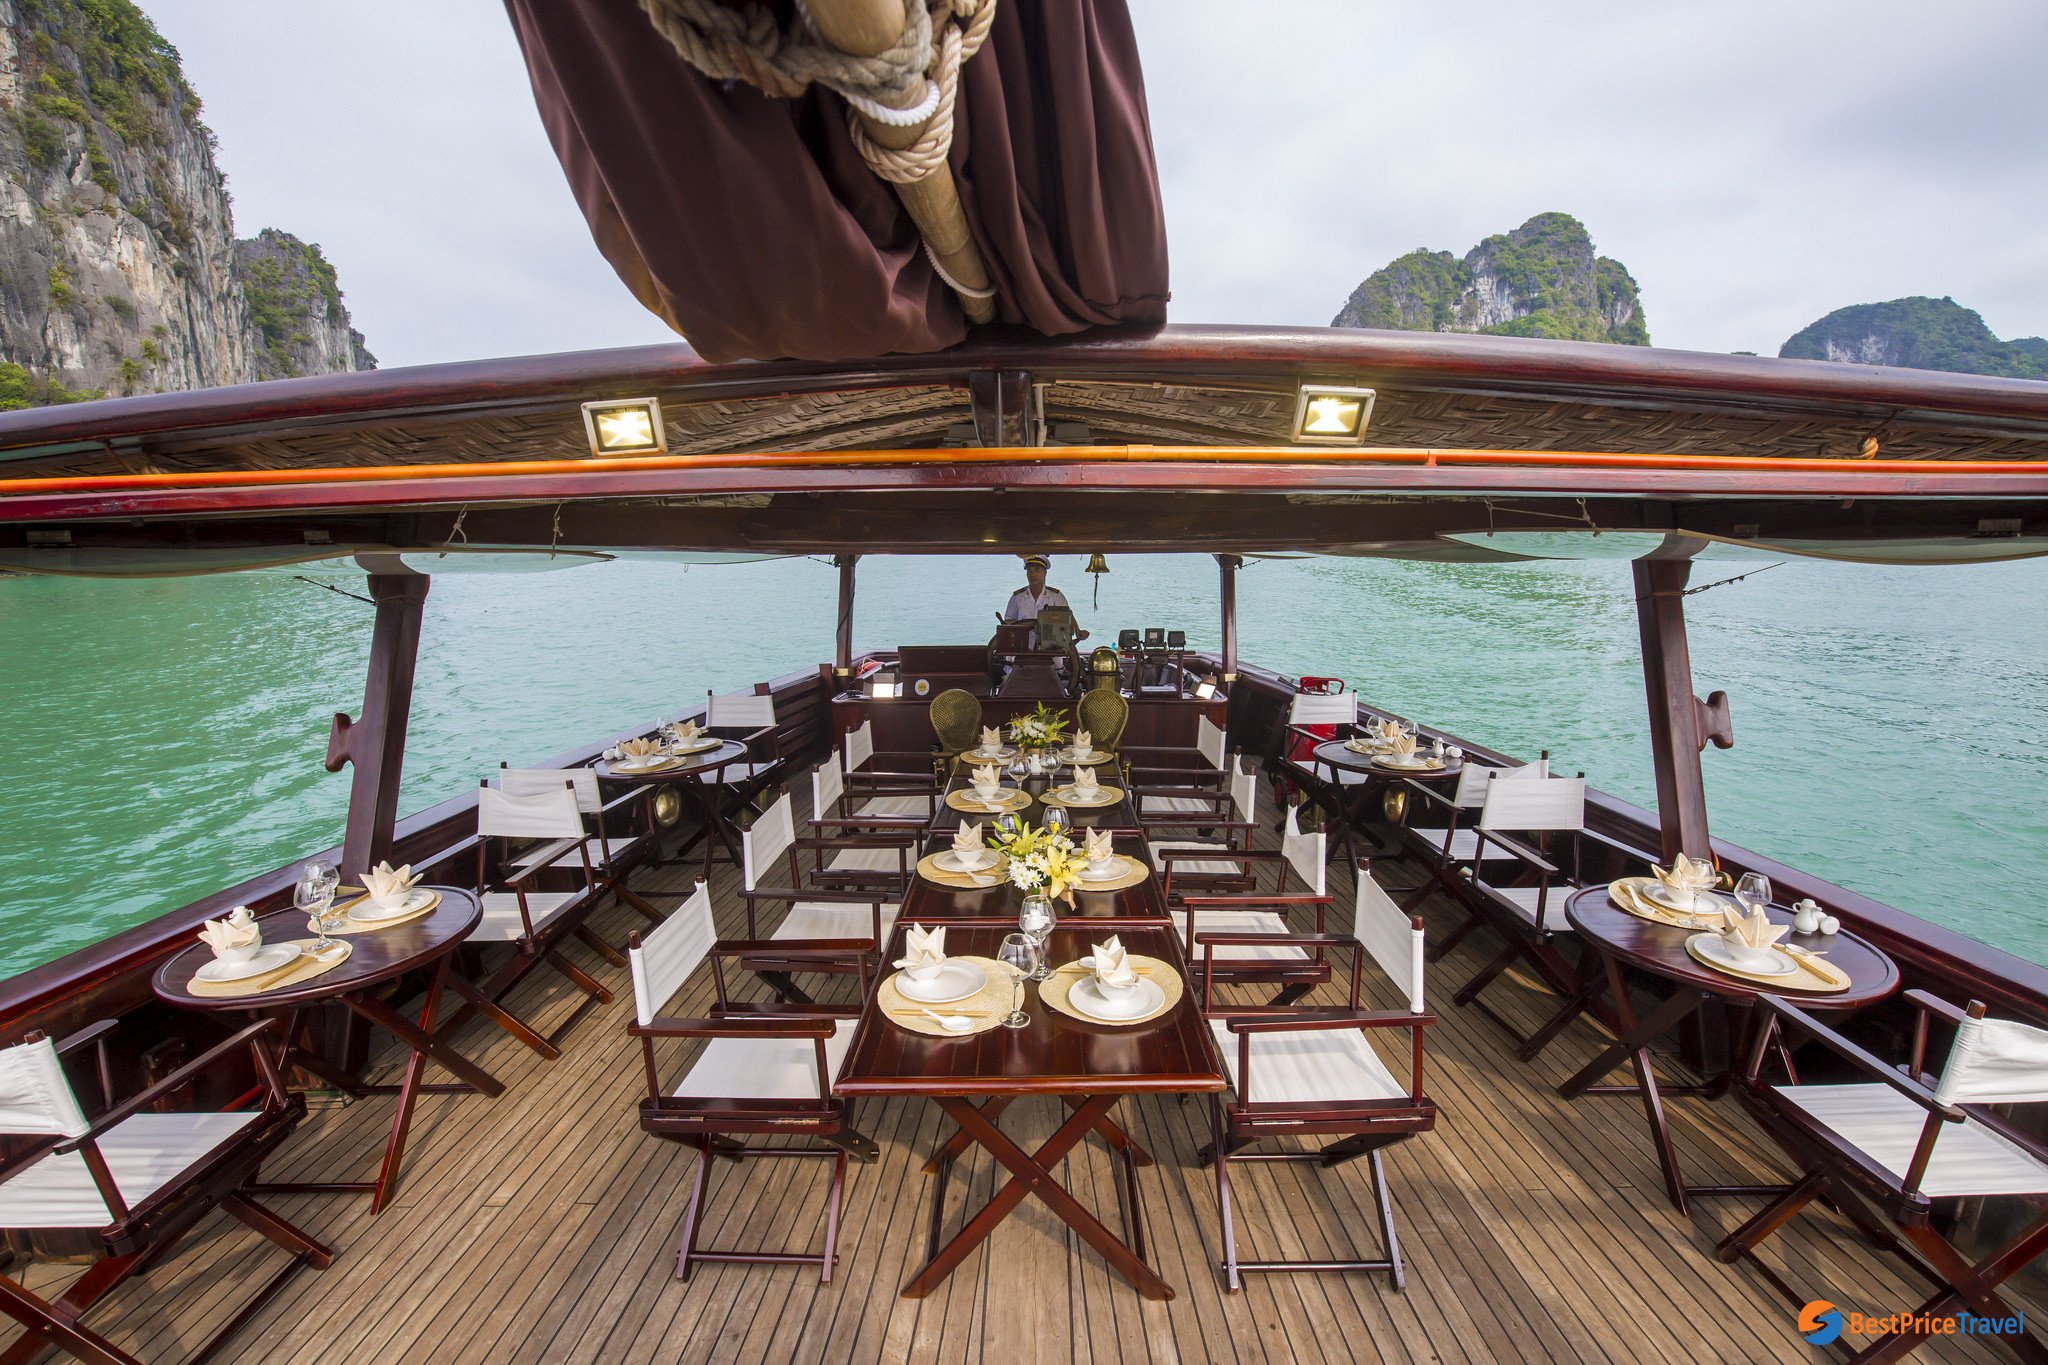 Nang Tien Day Cruise Outdoor Restaurant